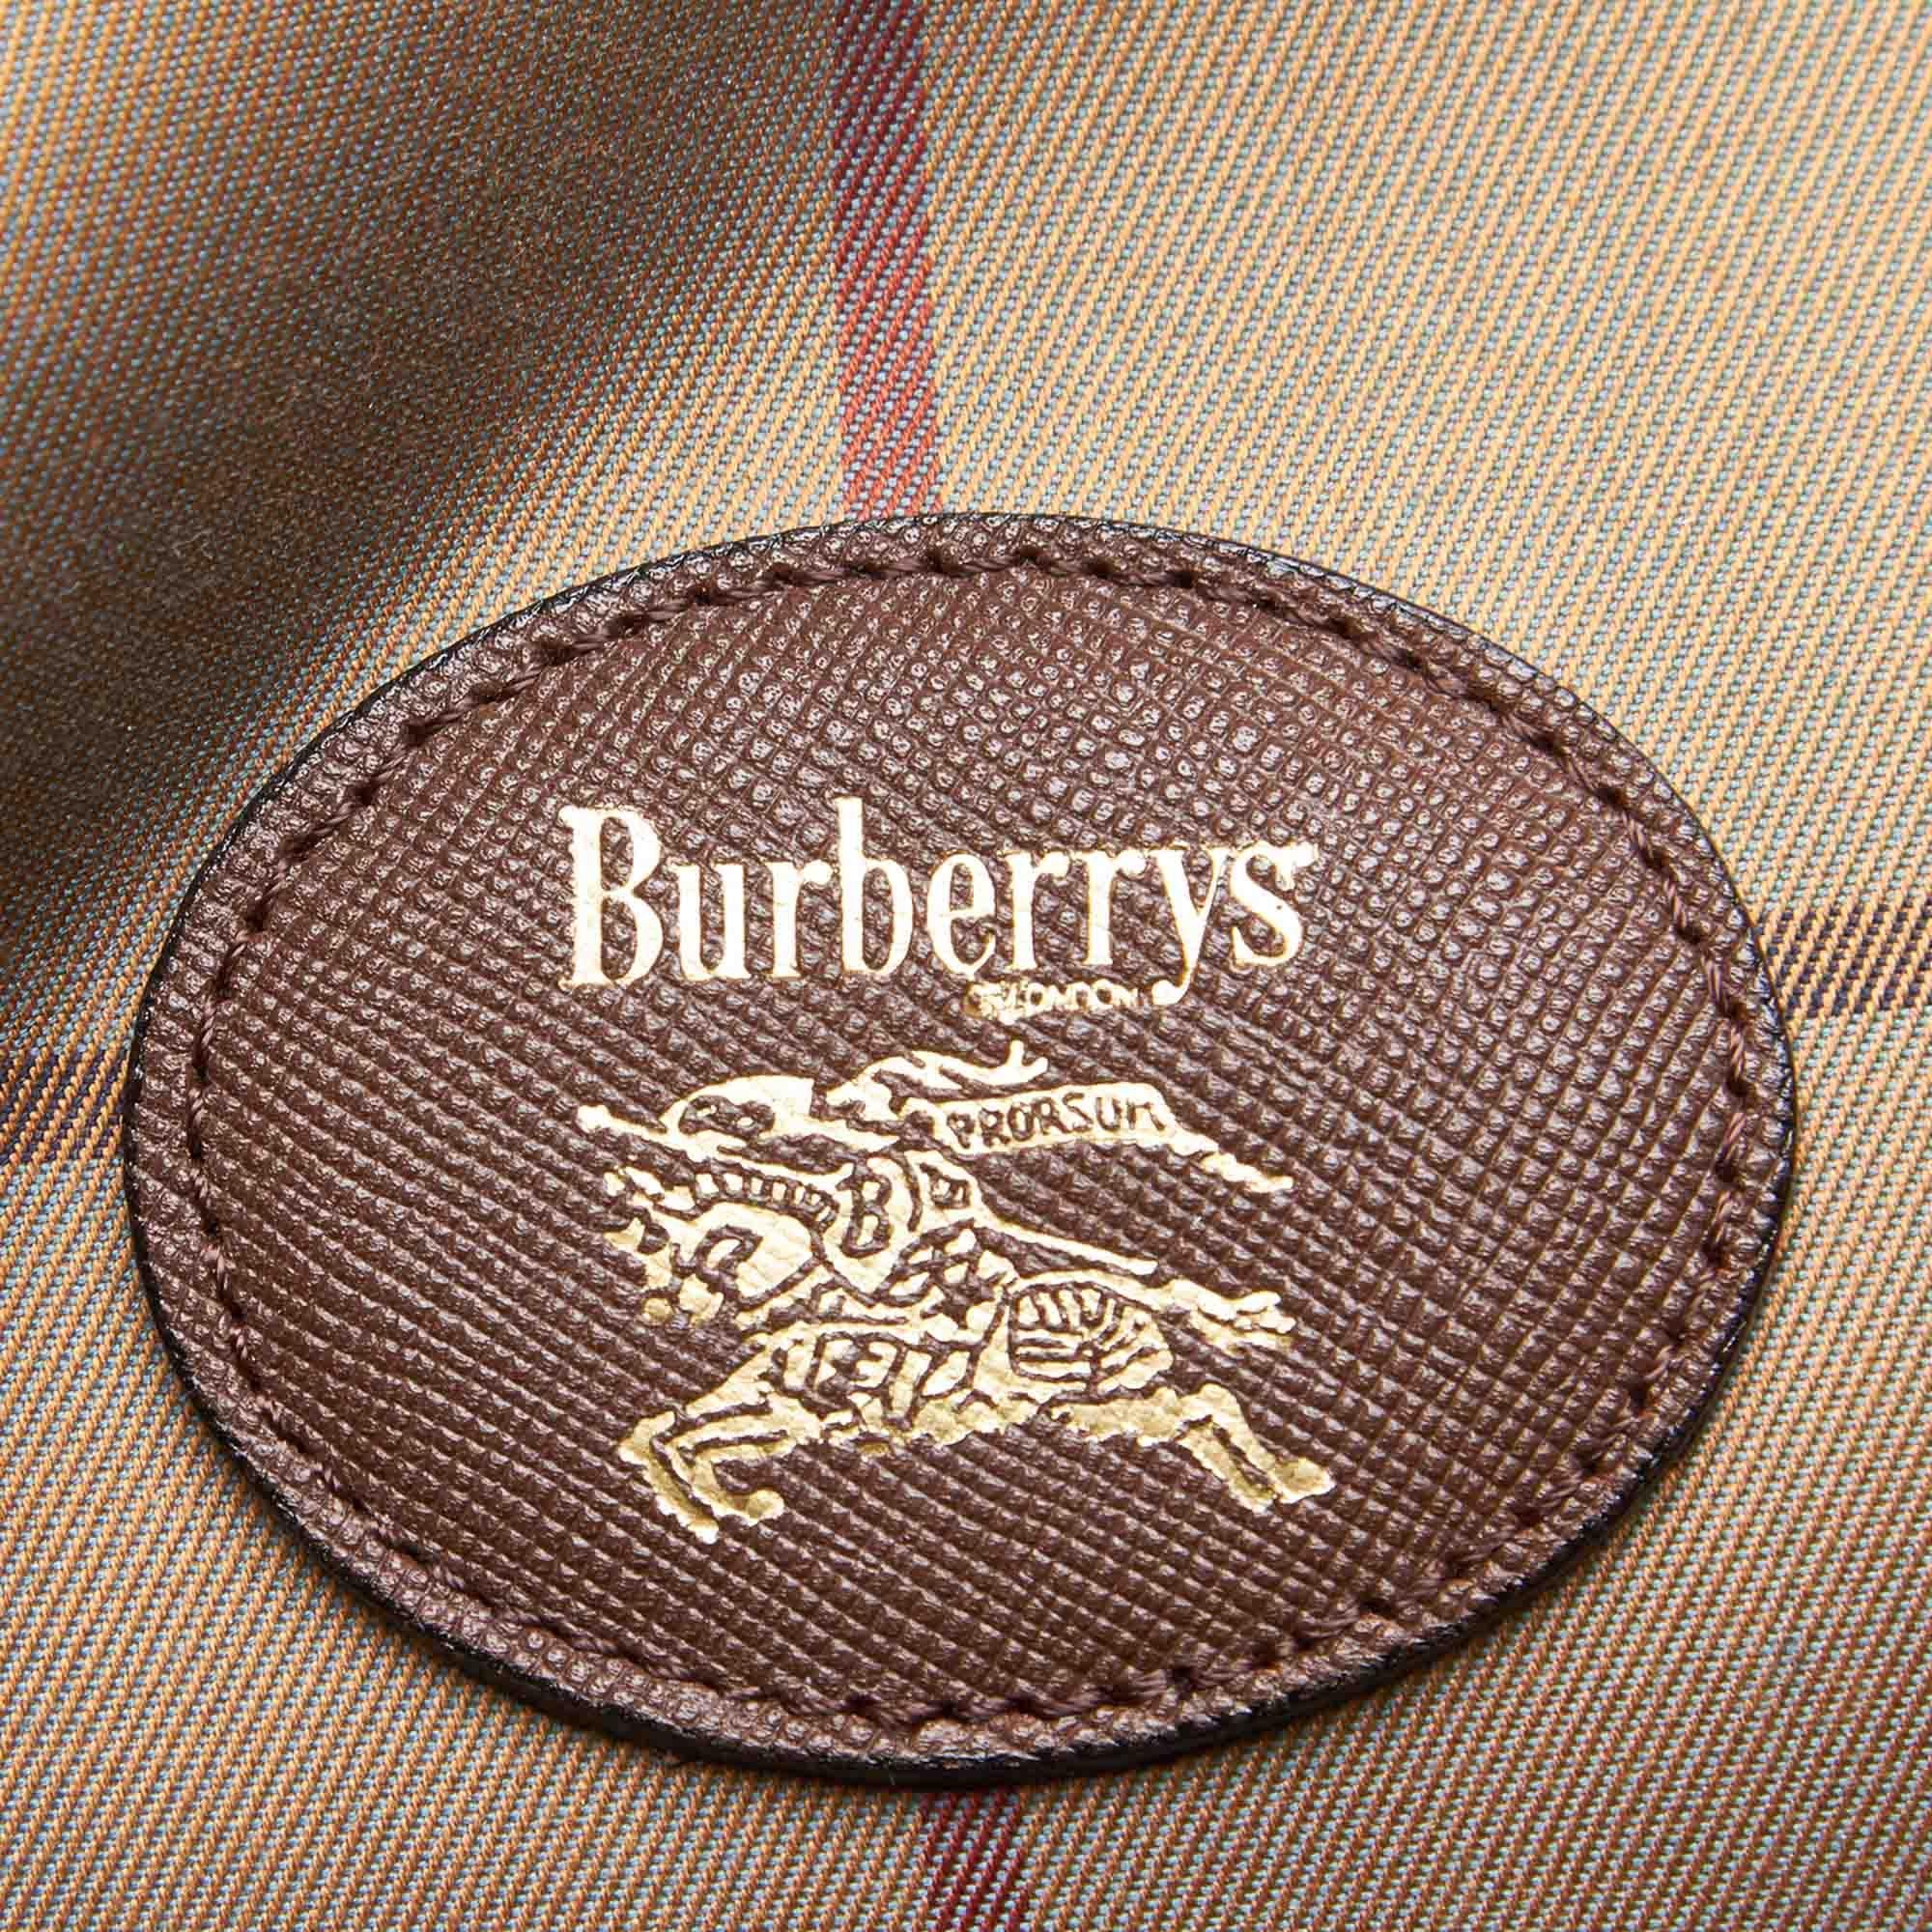  Vintage Authentic Burberry Brown Plaid Travel Bag United Kingdom LARGE For Sale 2